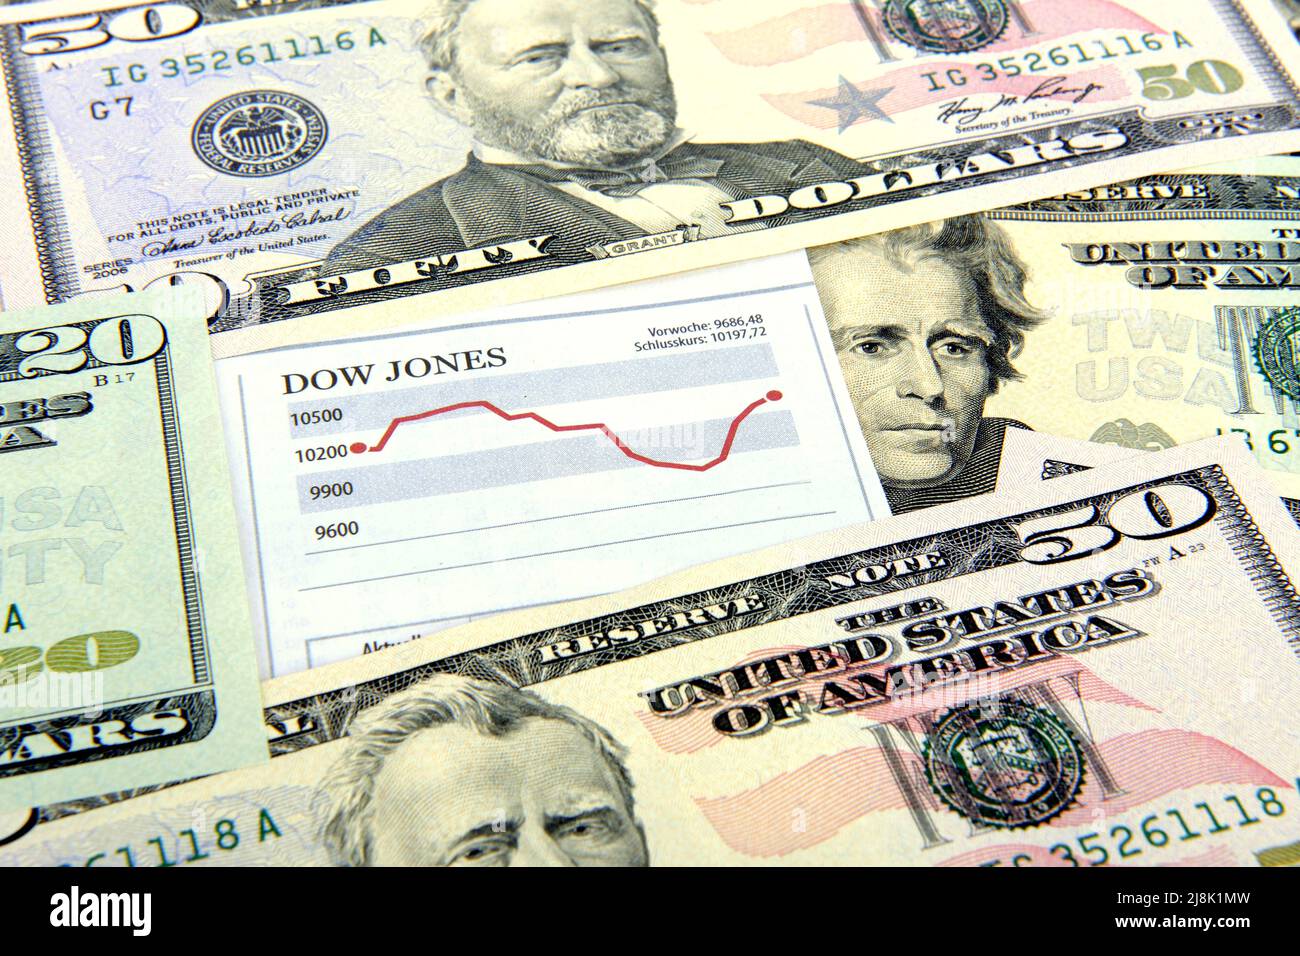 20 and 50 Dollar bills with stock price Dow Jones, USA Stock Photo